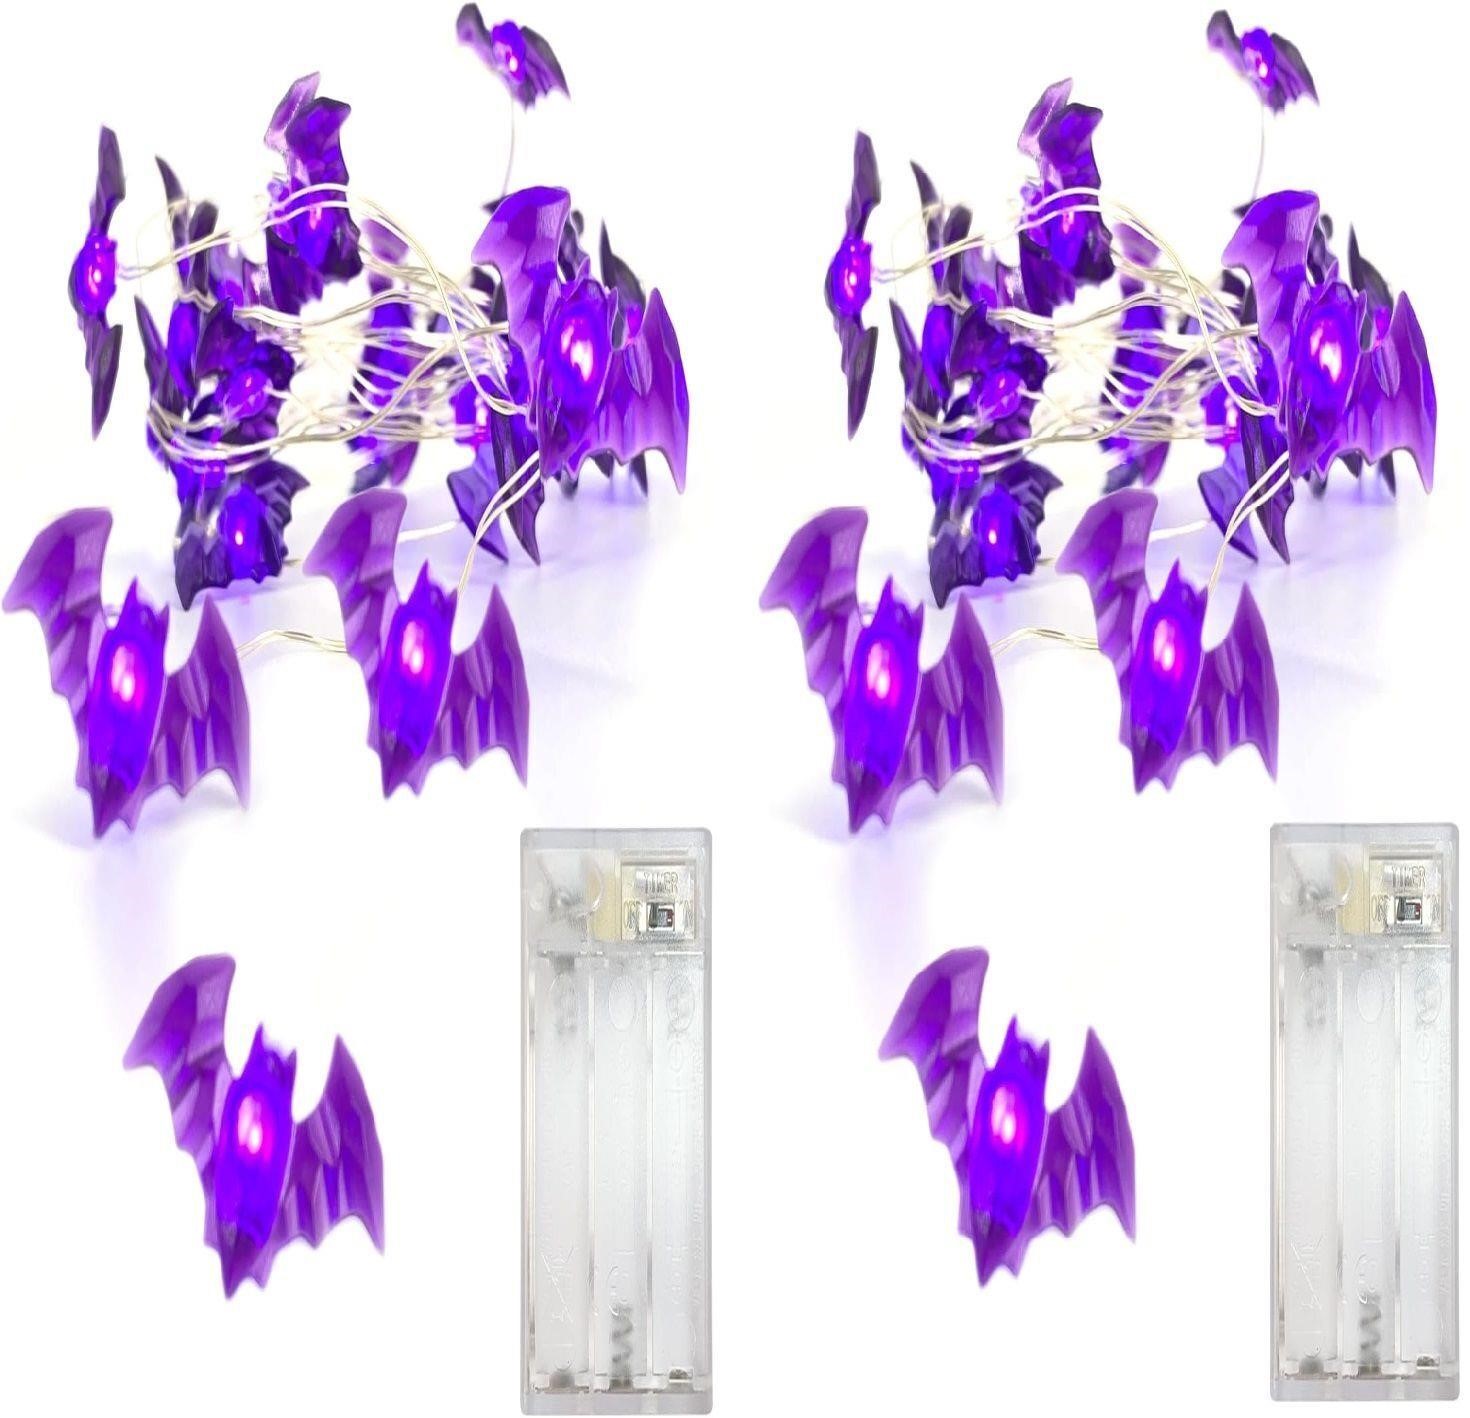 NEW $40 2PK 10FT Purple Bat Lights w/Timer